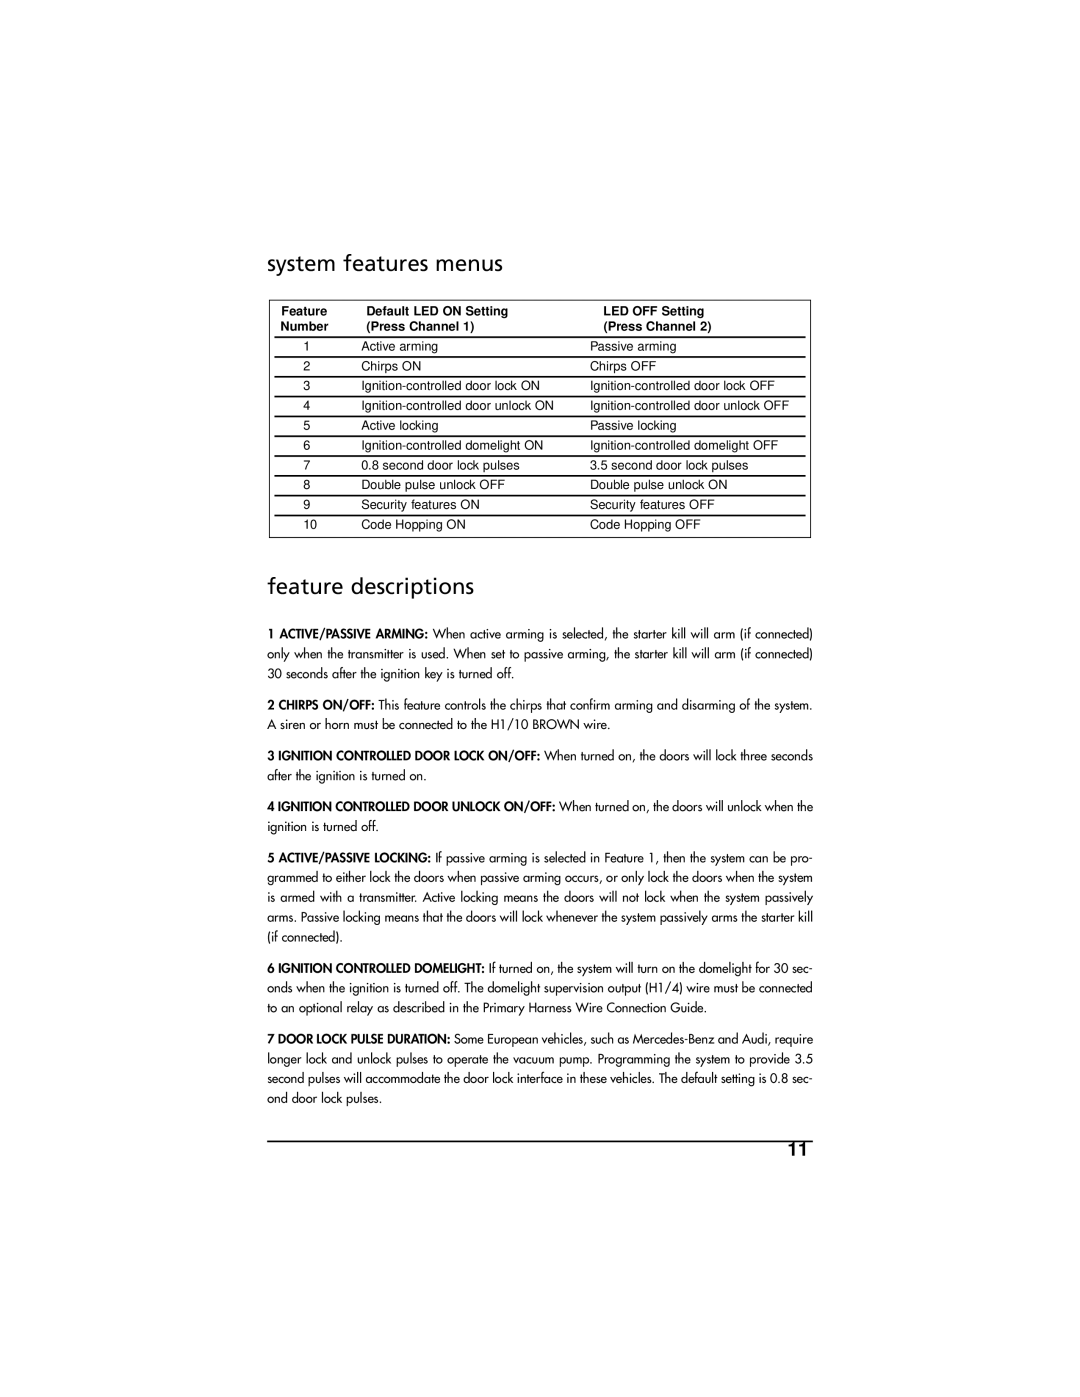 Directed Electronics K10 manual system features menus, feature descriptions 